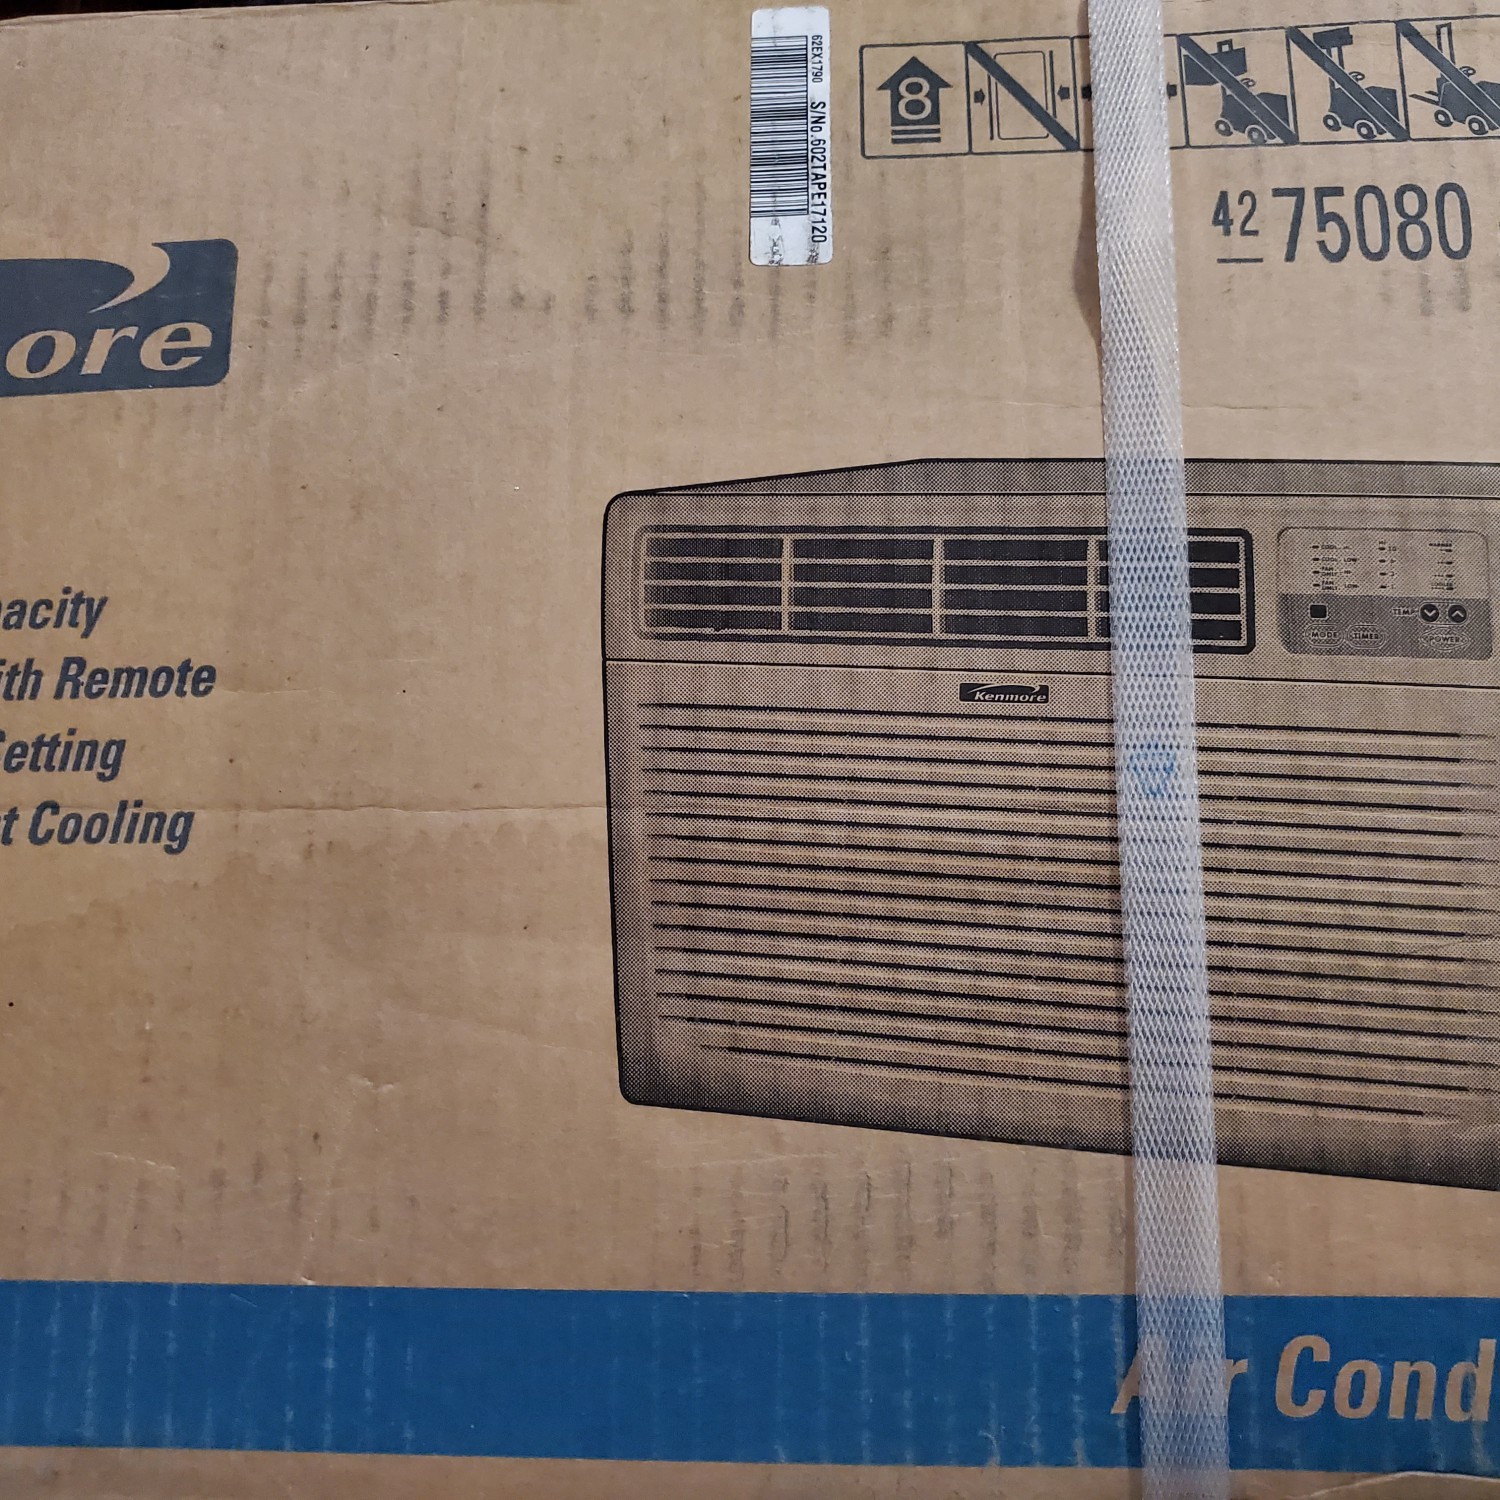 Kenmore 8,000 btu window air conditioner (brand new)